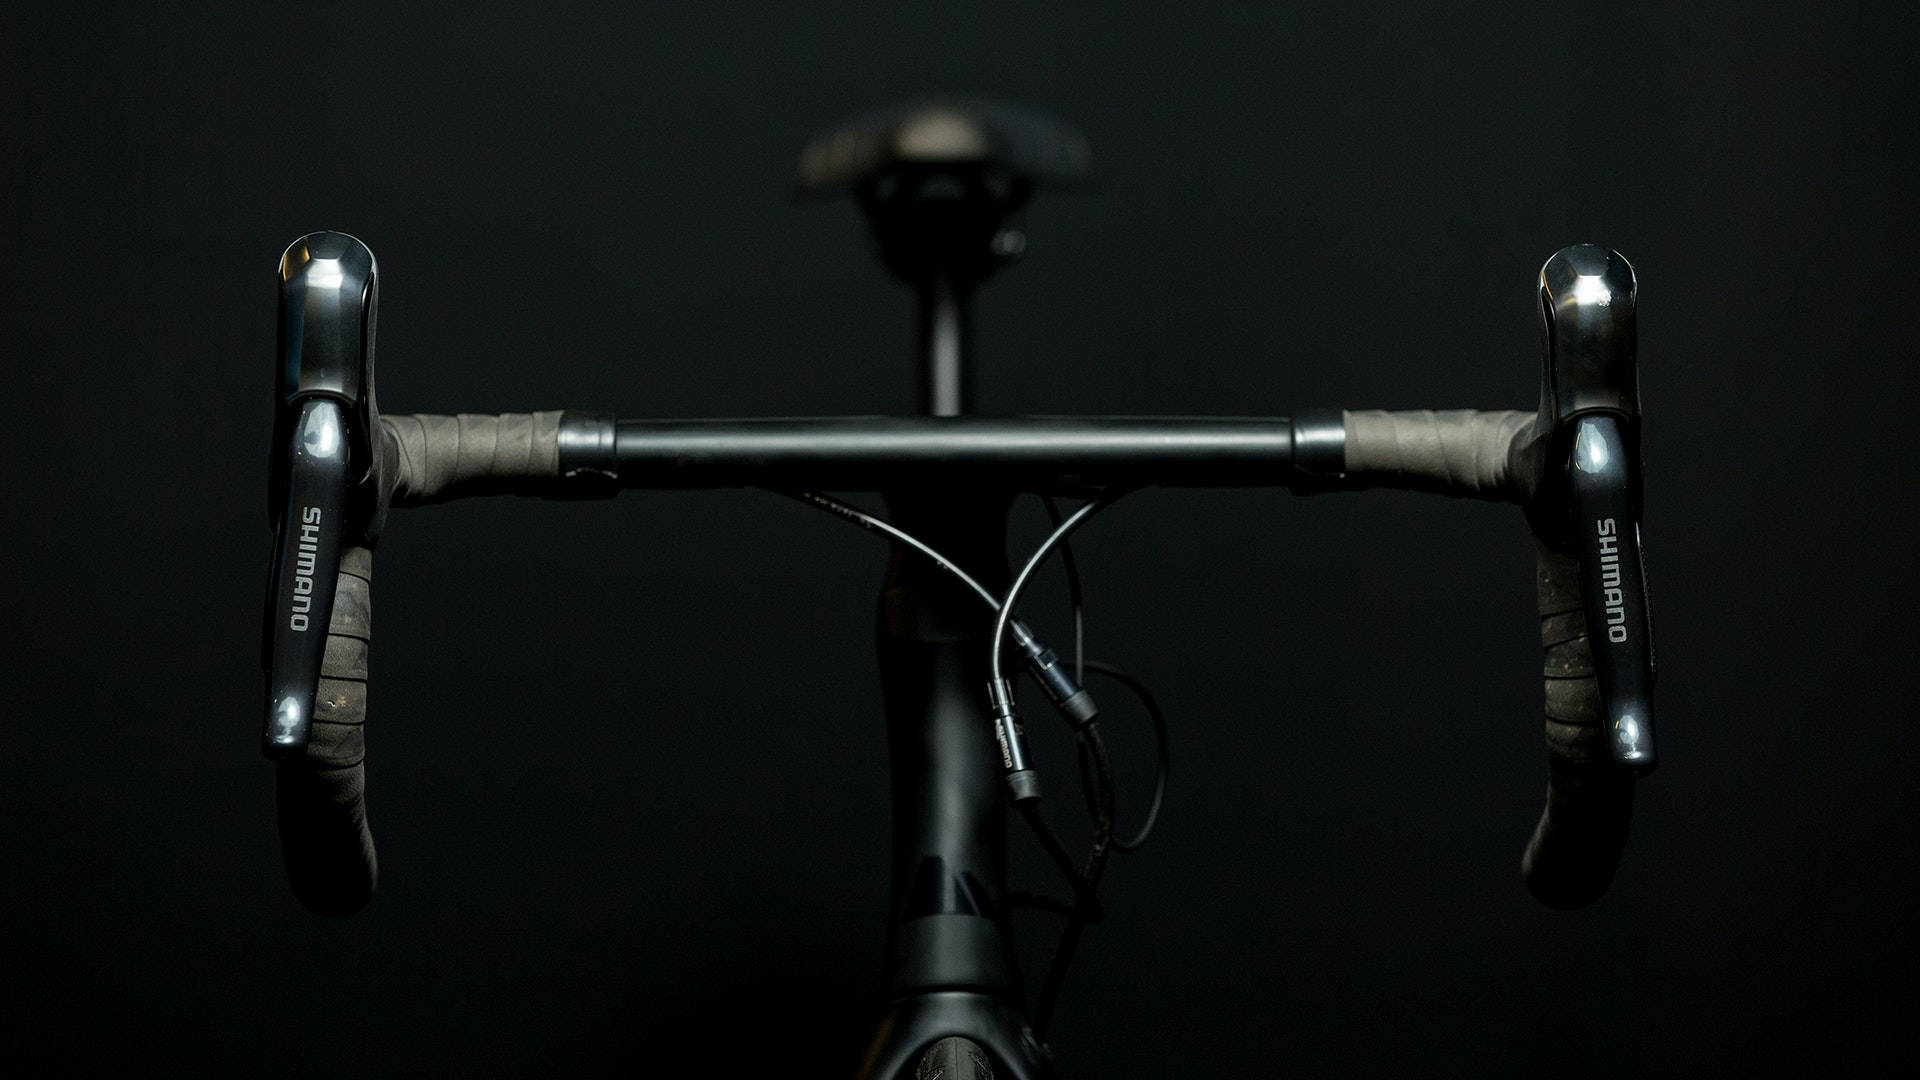 Black Shimano Road Bike Wallpaper